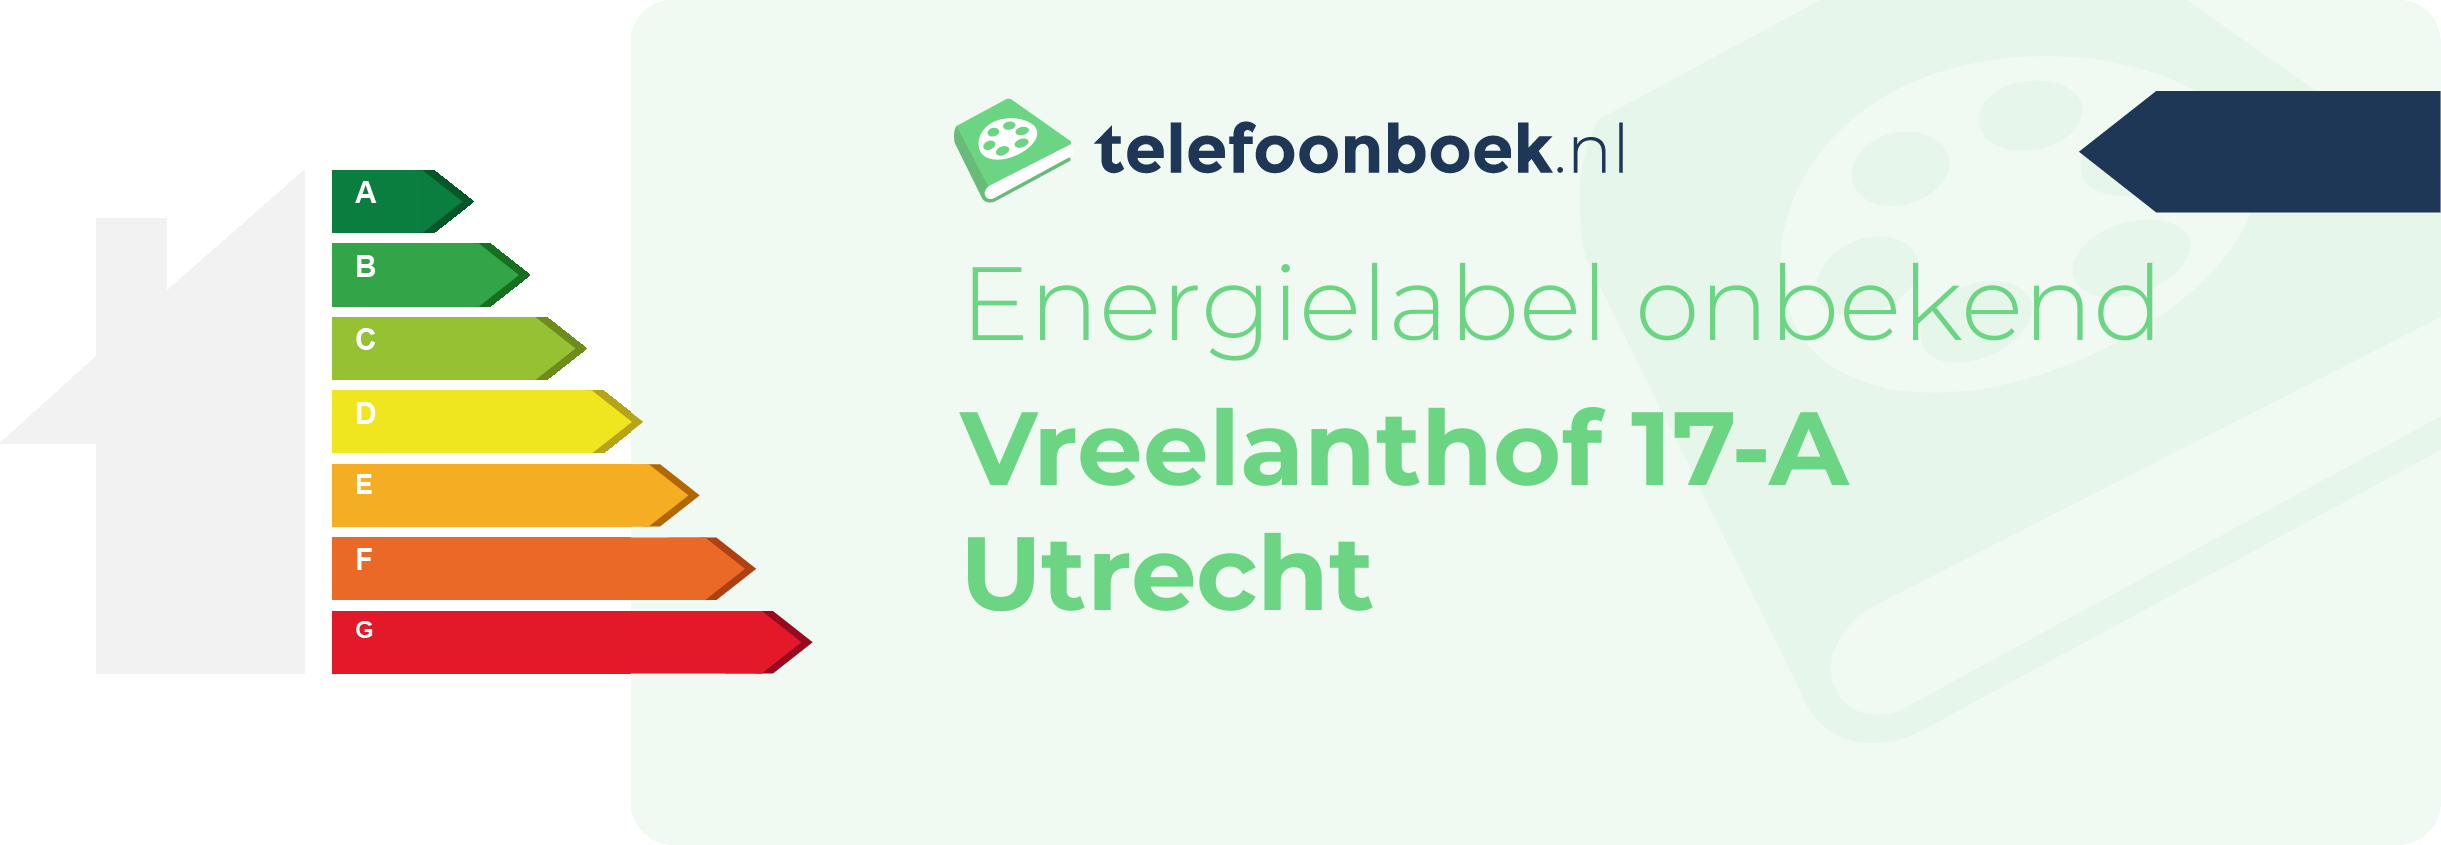 Energielabel Vreelanthof 17-A Utrecht